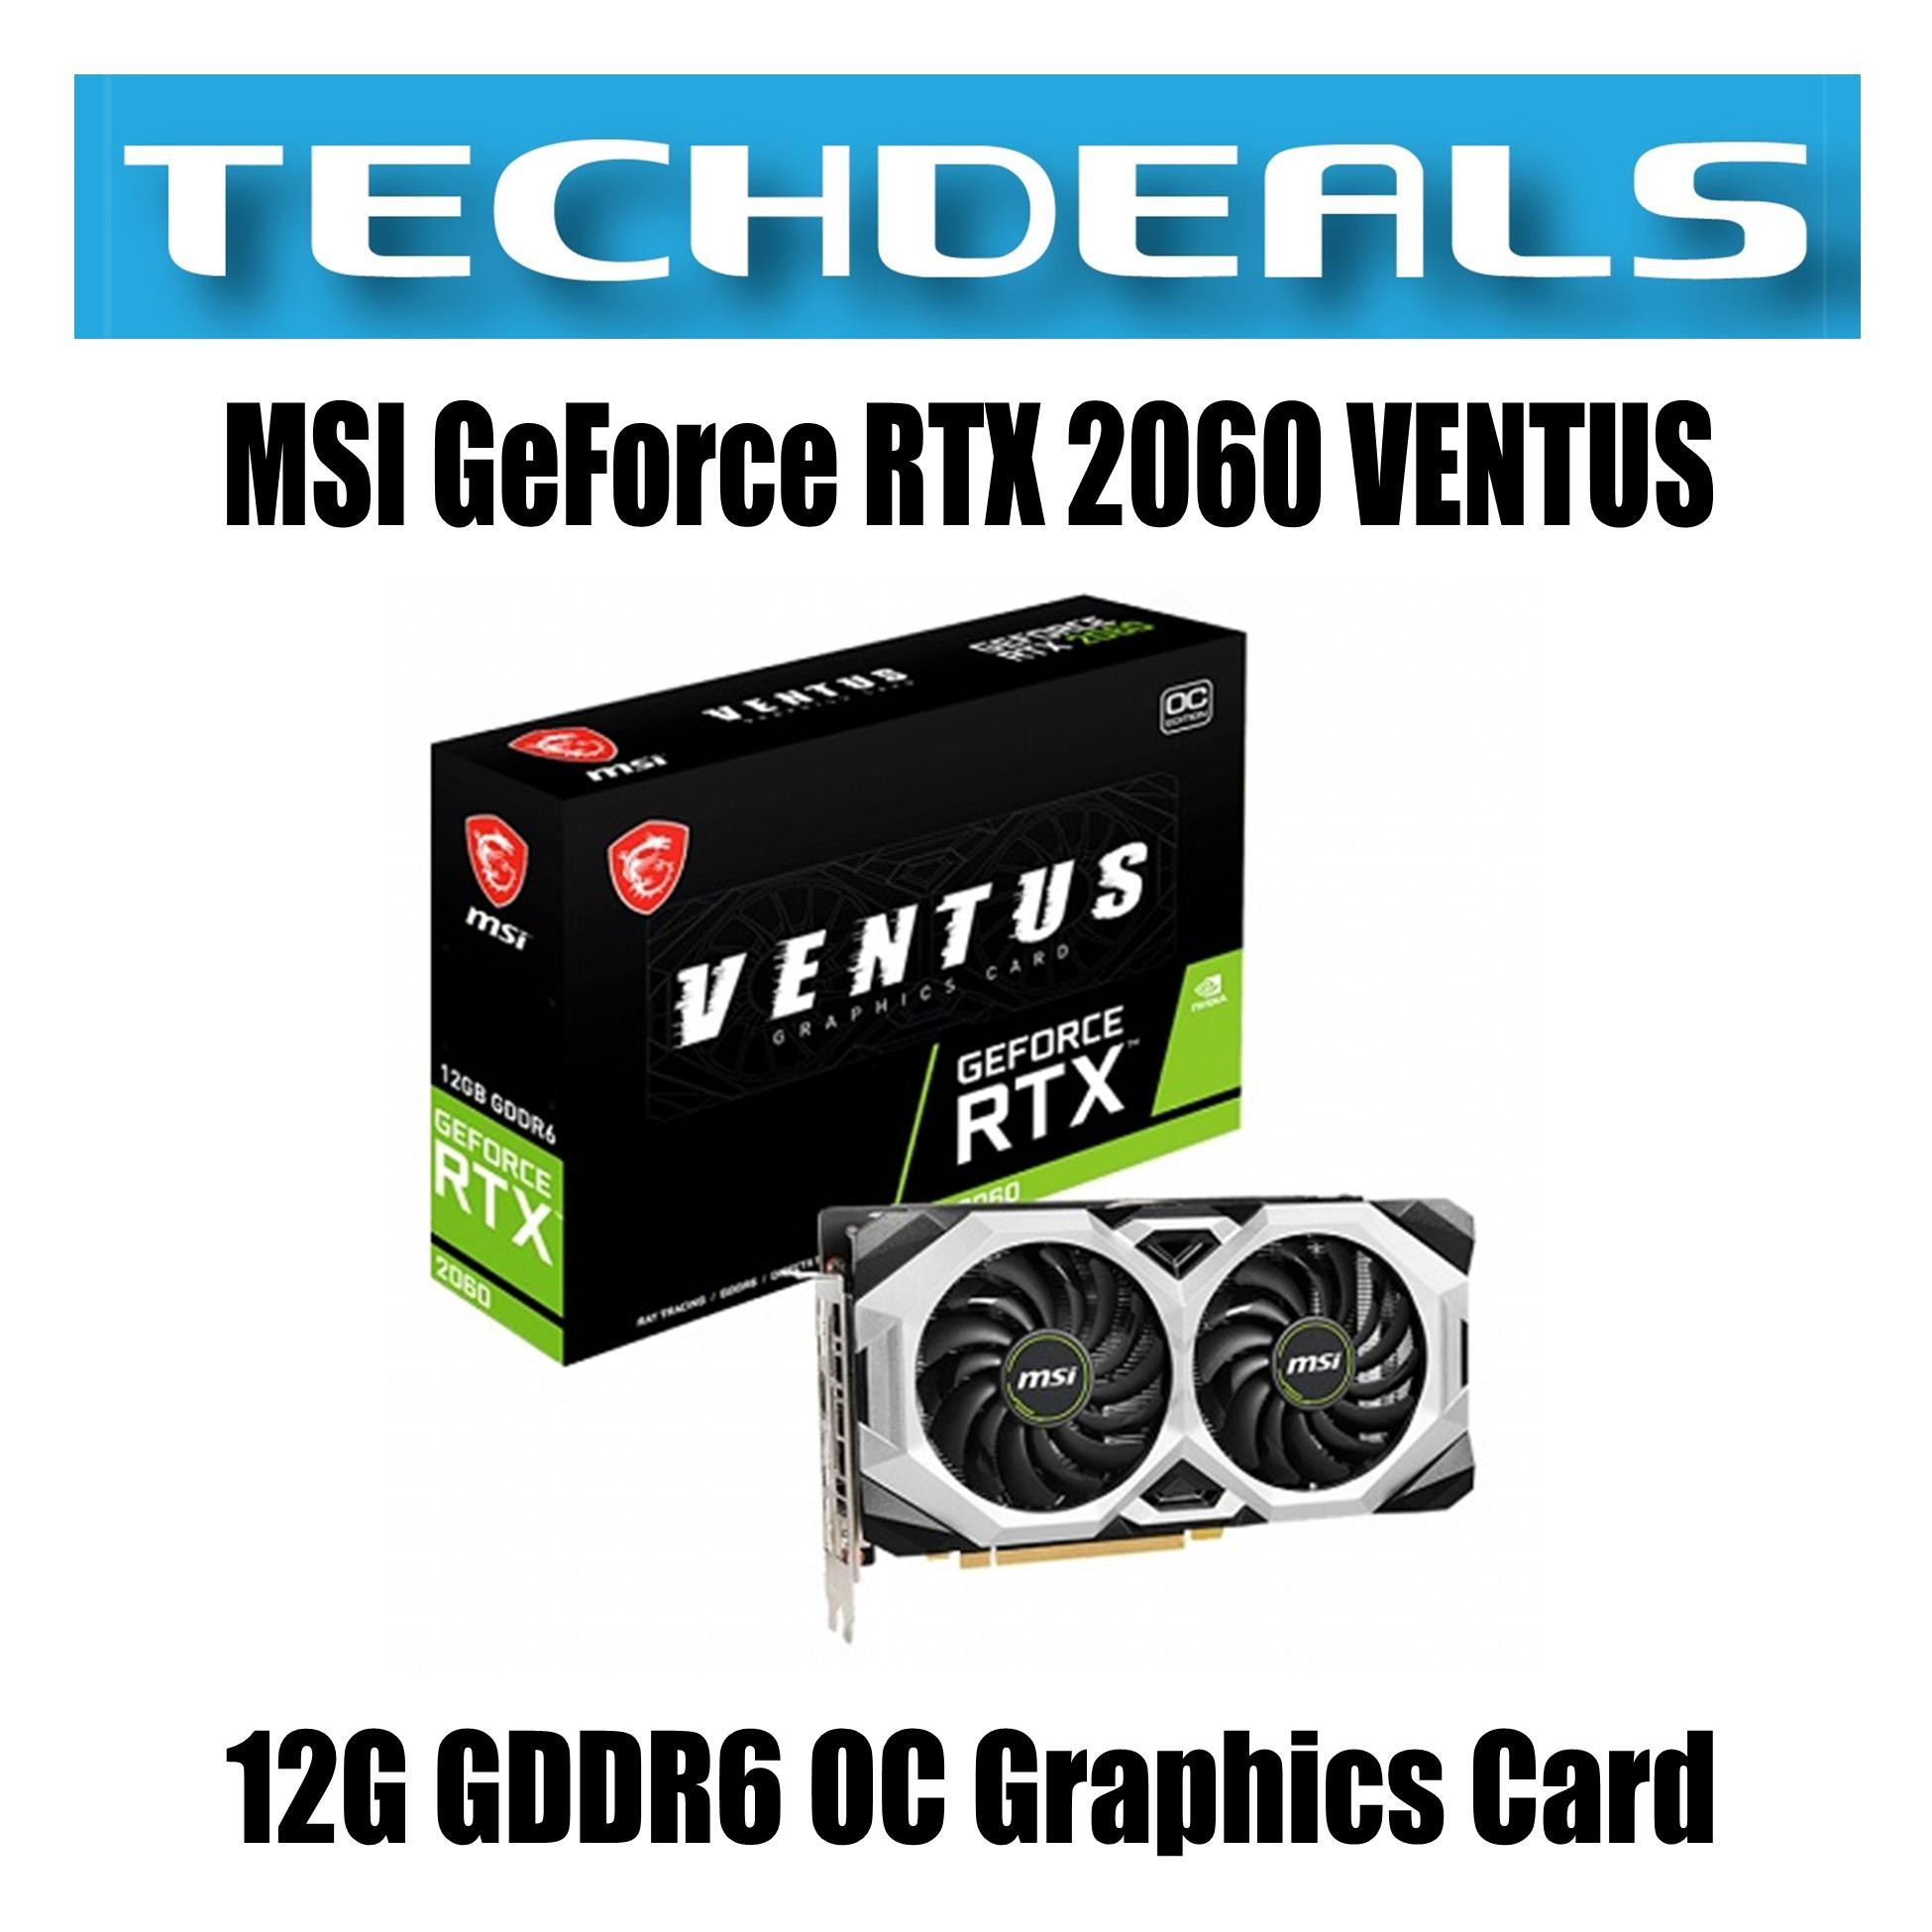 MSI GeForce RTX 2060 VENTUS 12G GDDR6 OC GPU